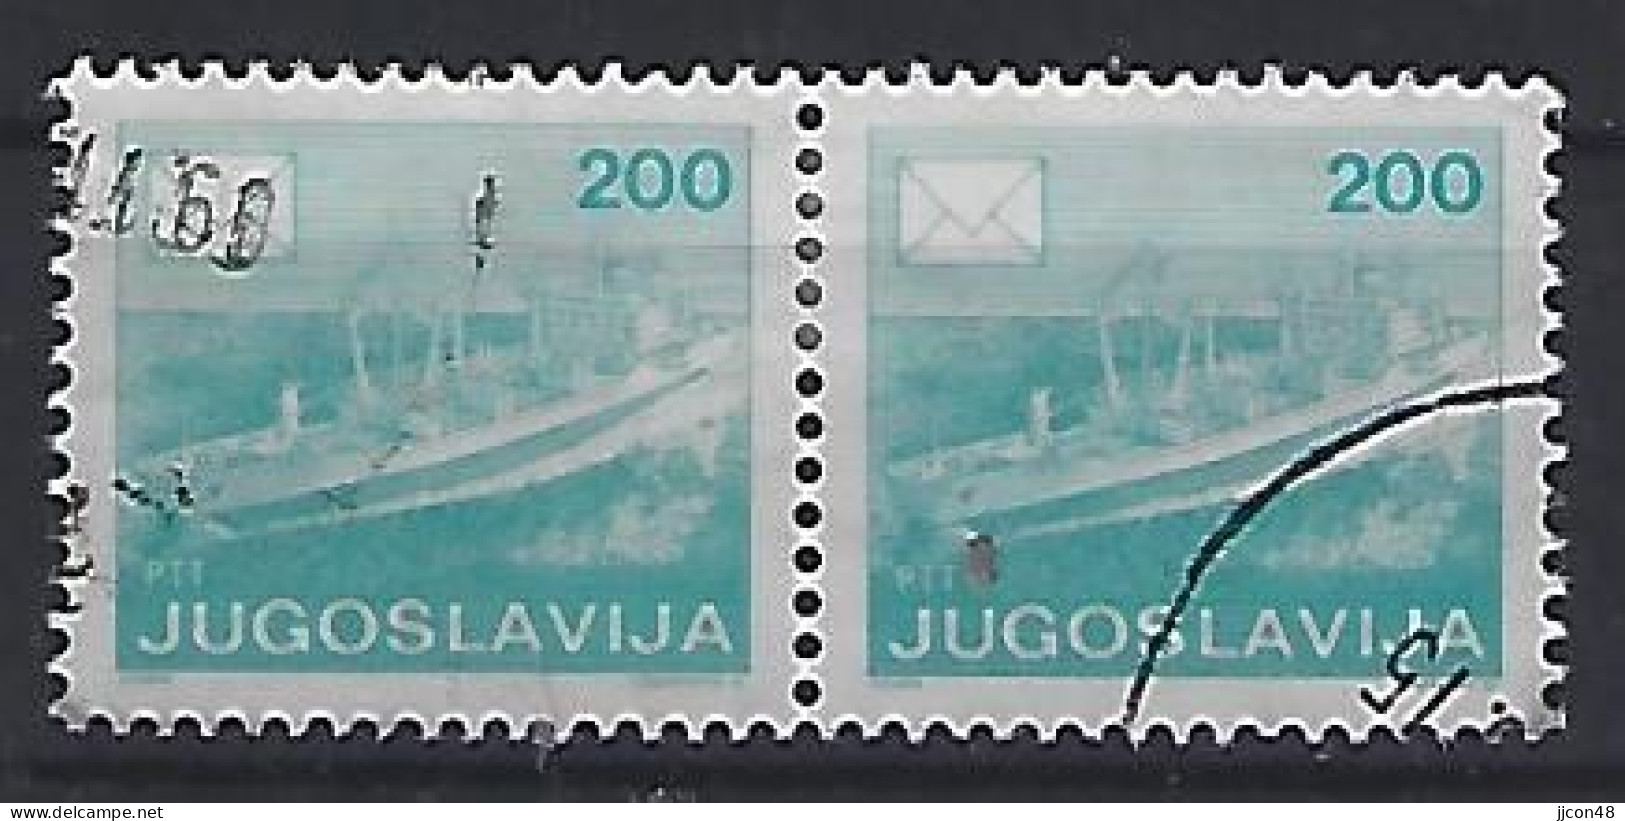 Jugoslavia 1986  Postdienst (o) Mi.2176 A - Used Stamps